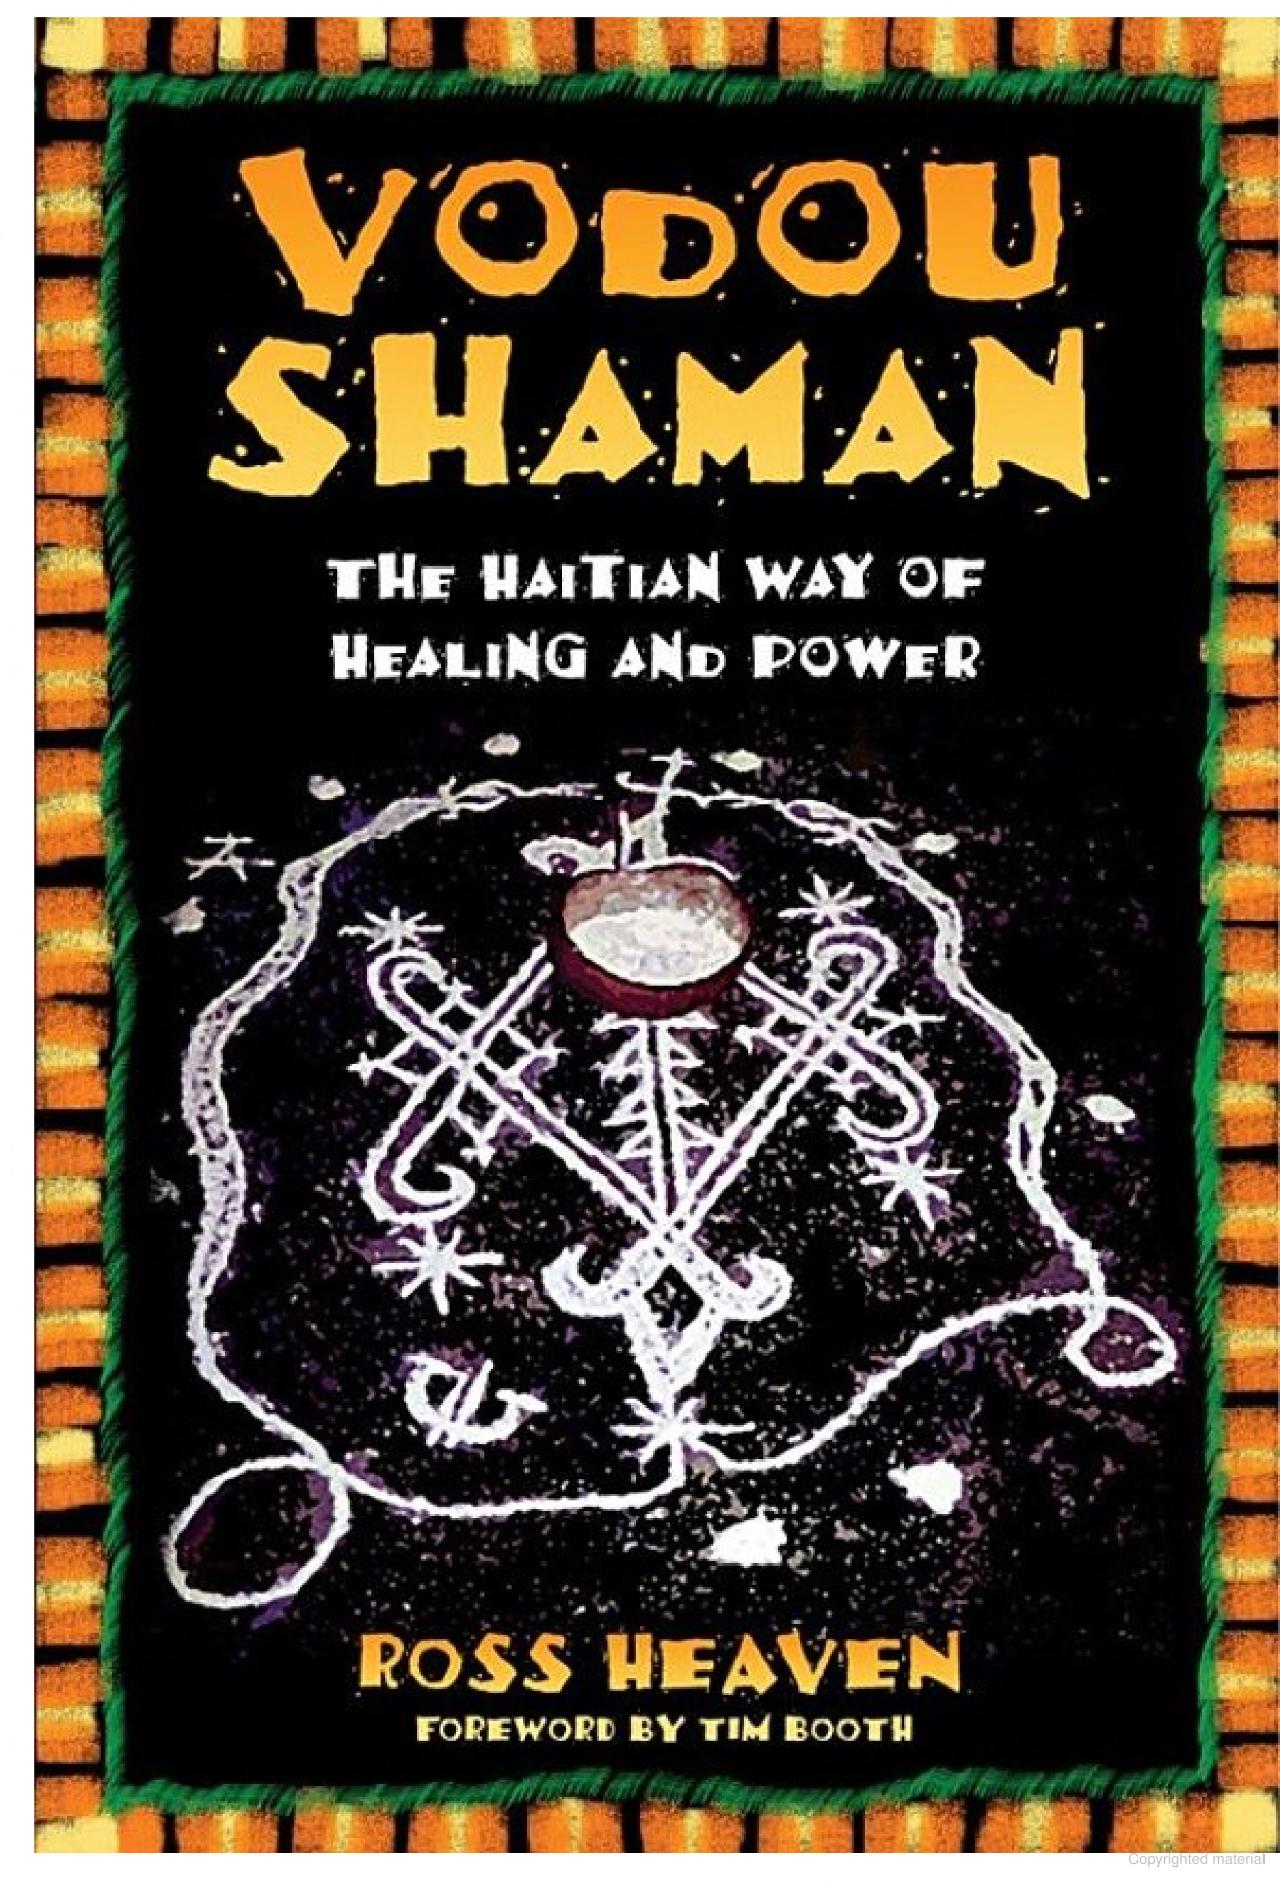 Vodou Shaman by Ross Heaven